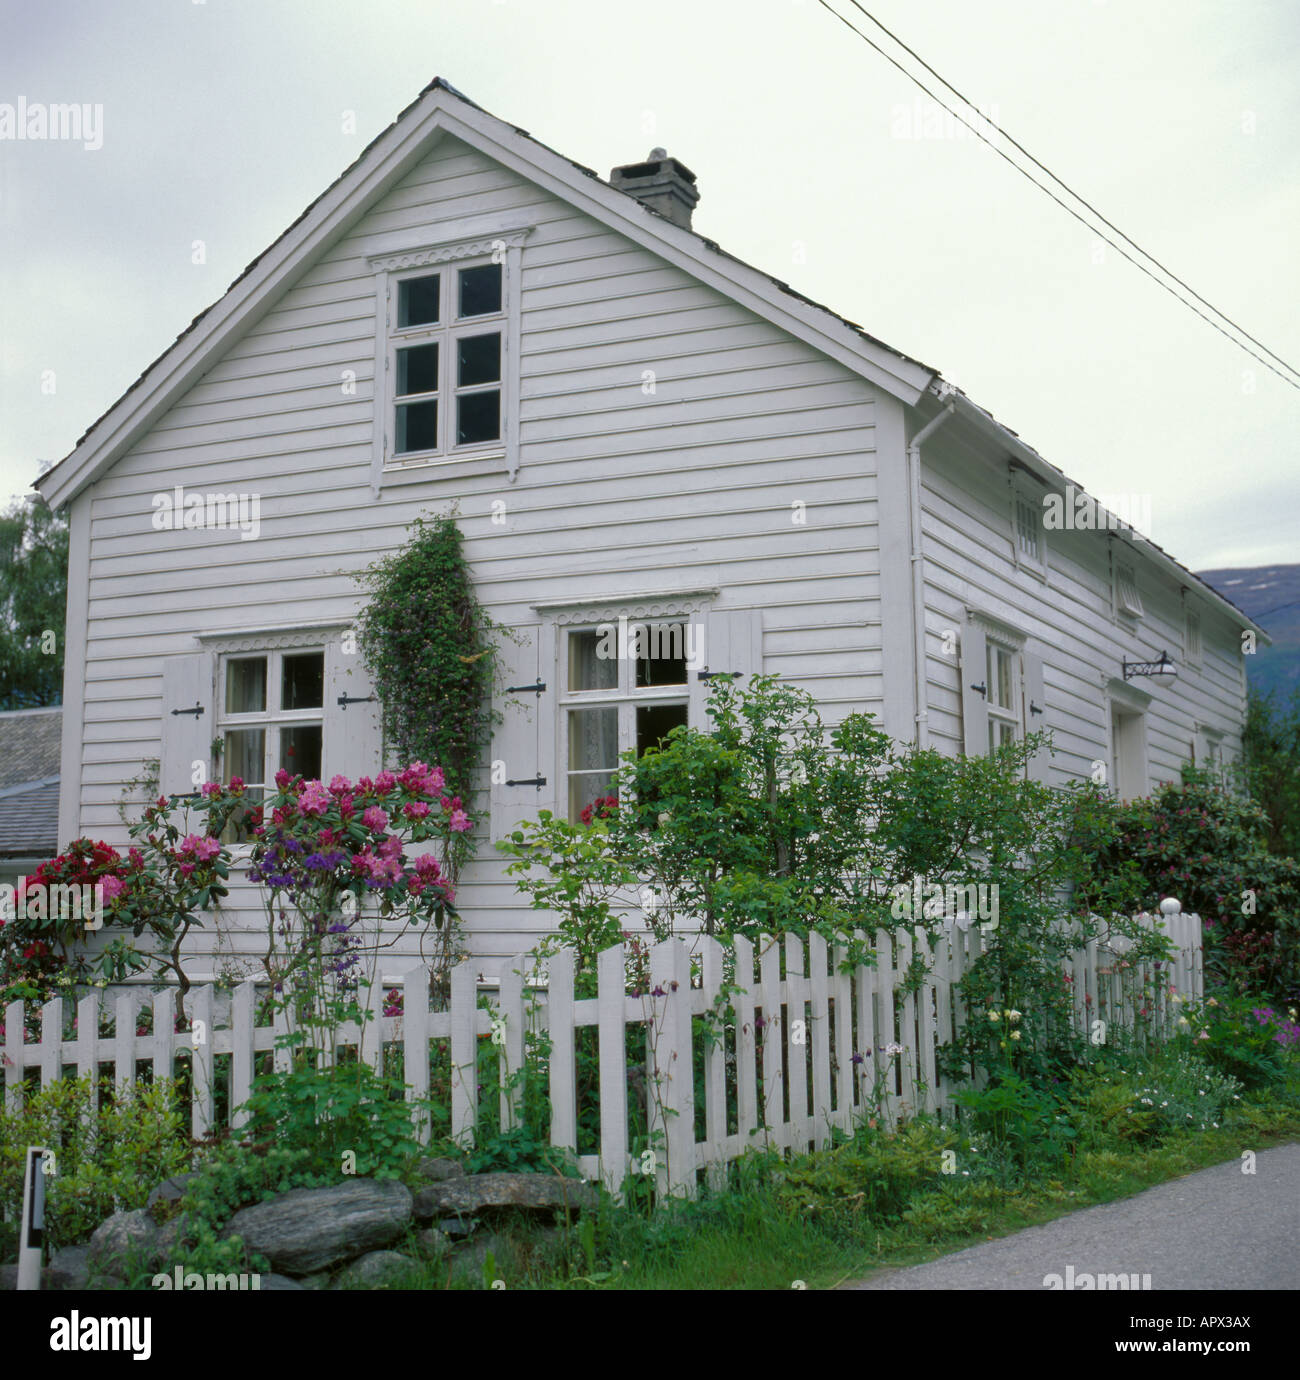 Maison en bois blanc norvégien et le jardin, Olden, Innvikfjord, un bras du fjord de Sogn og Fjordane, en Norvège. Banque D'Images